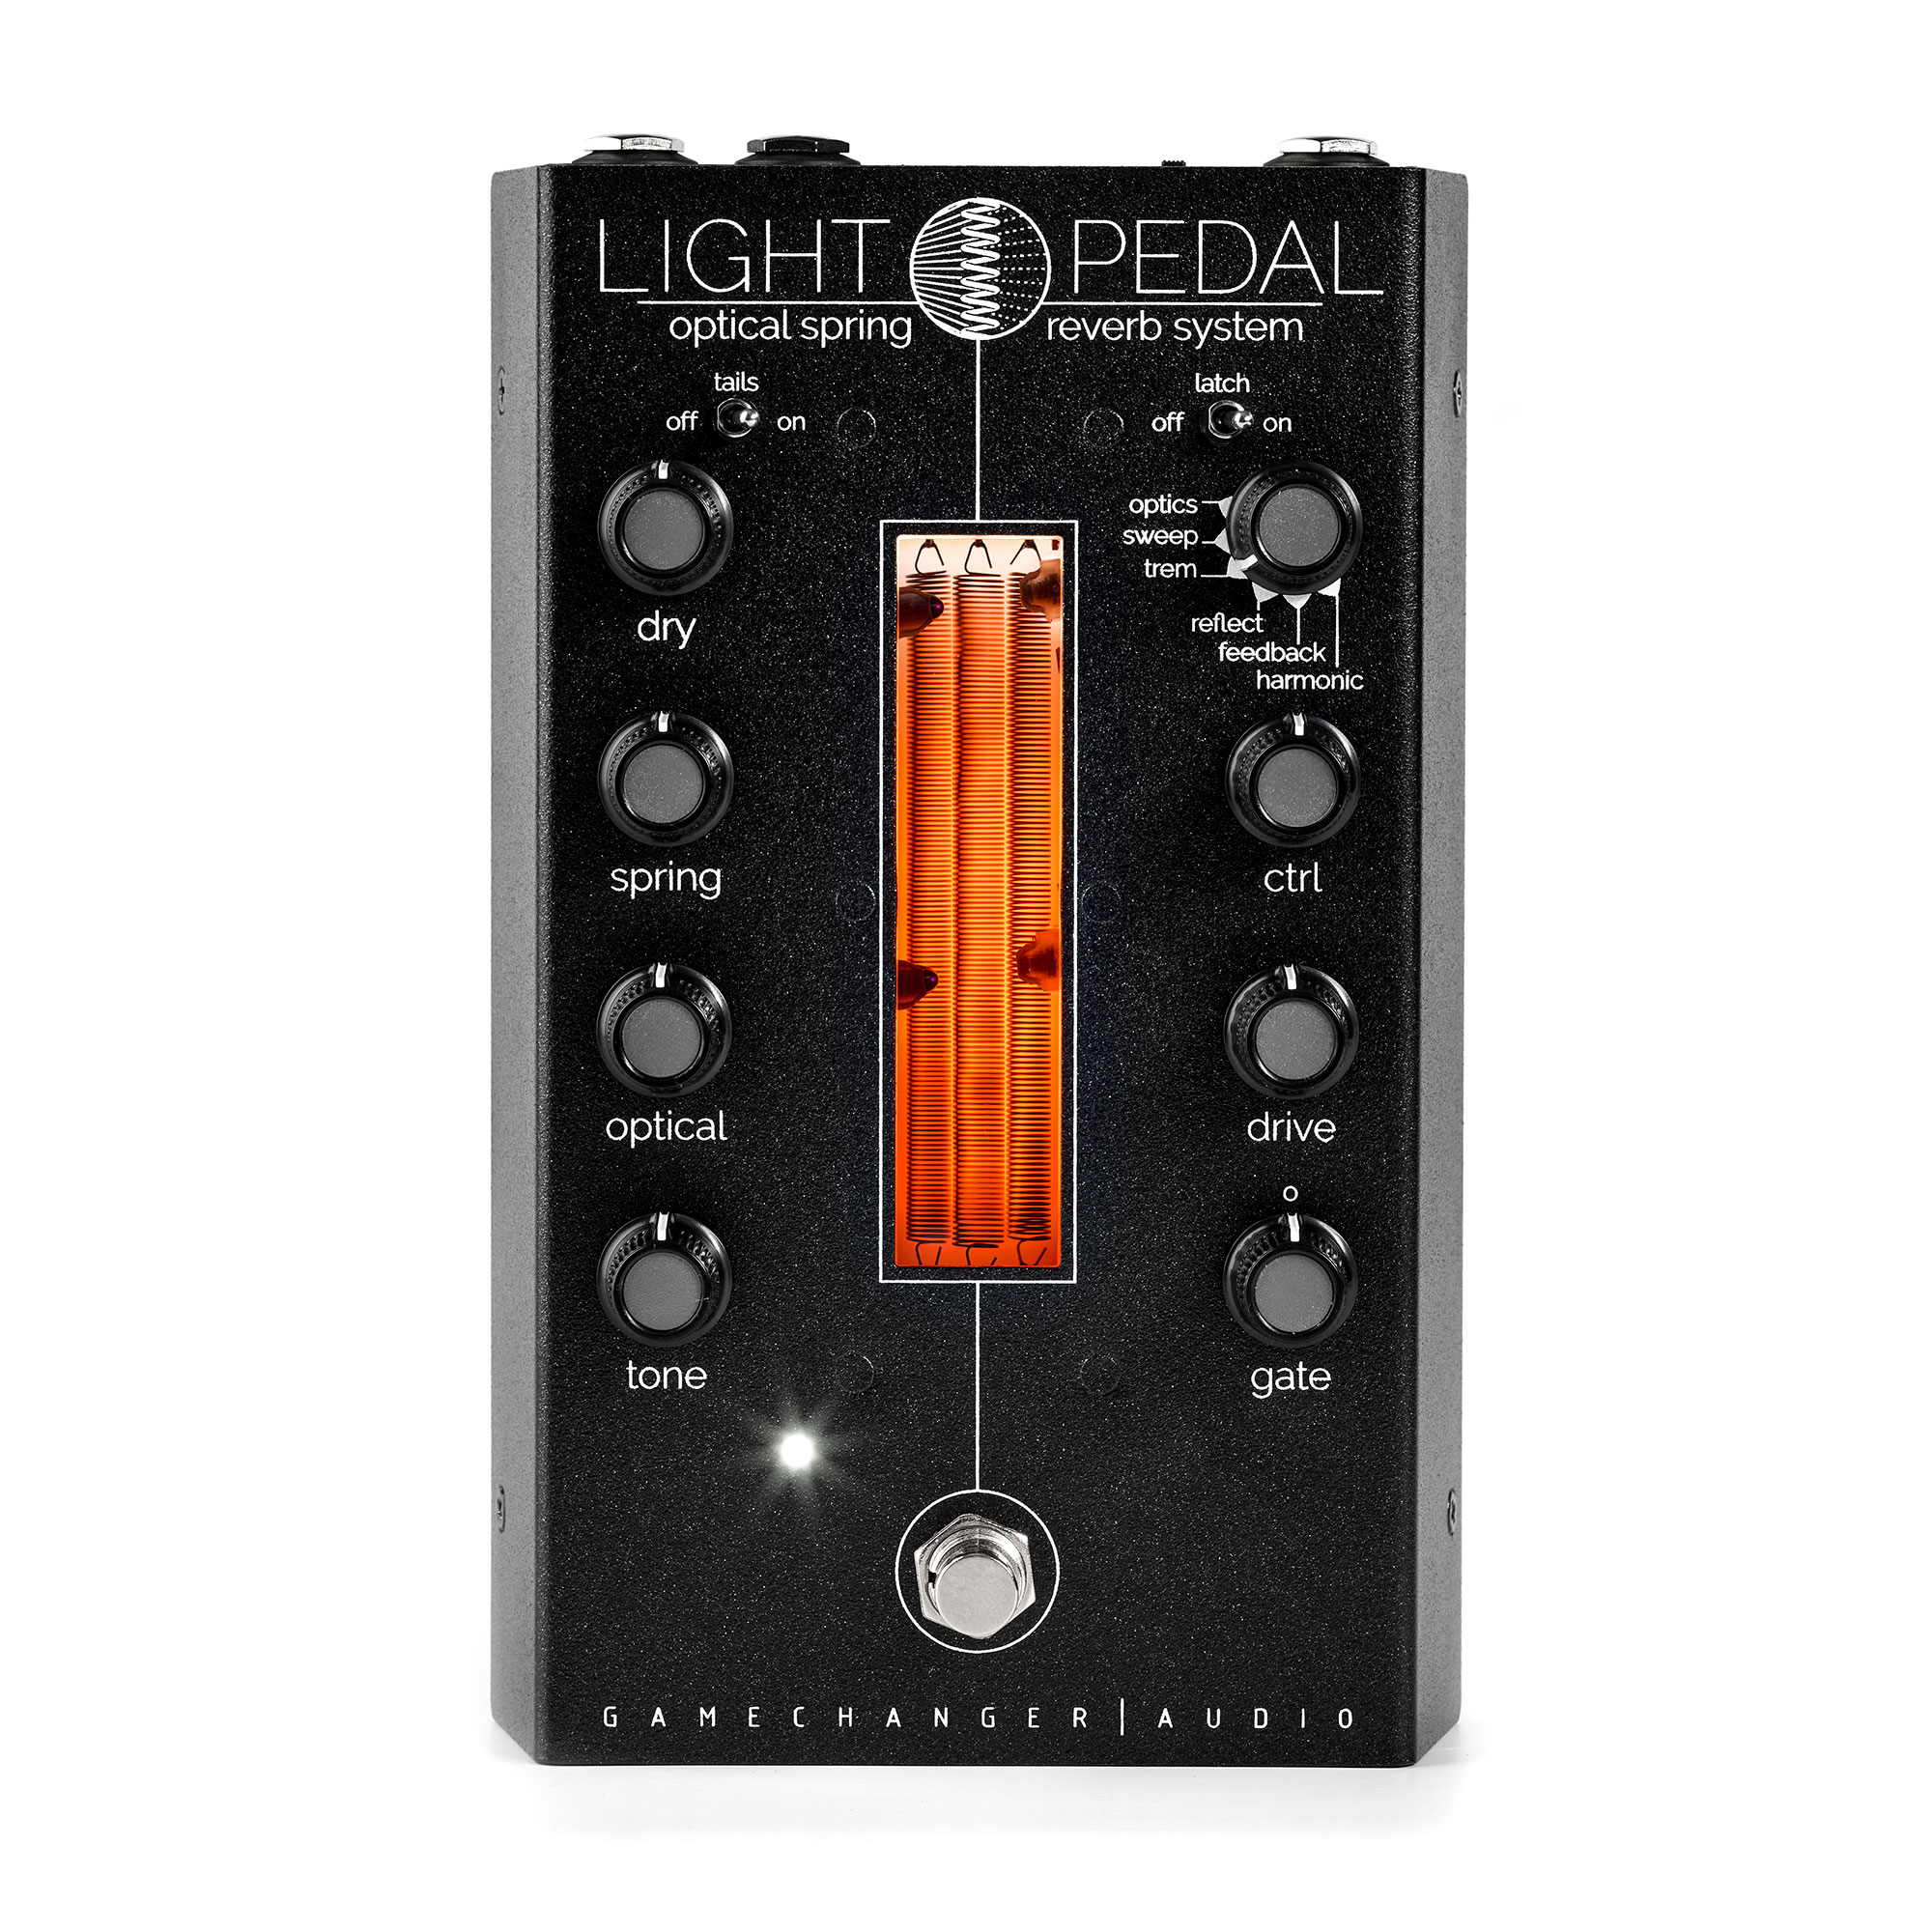 Gamechanger Audio  LIGHT PEDAL リバーブペダルホビー・楽器・アート